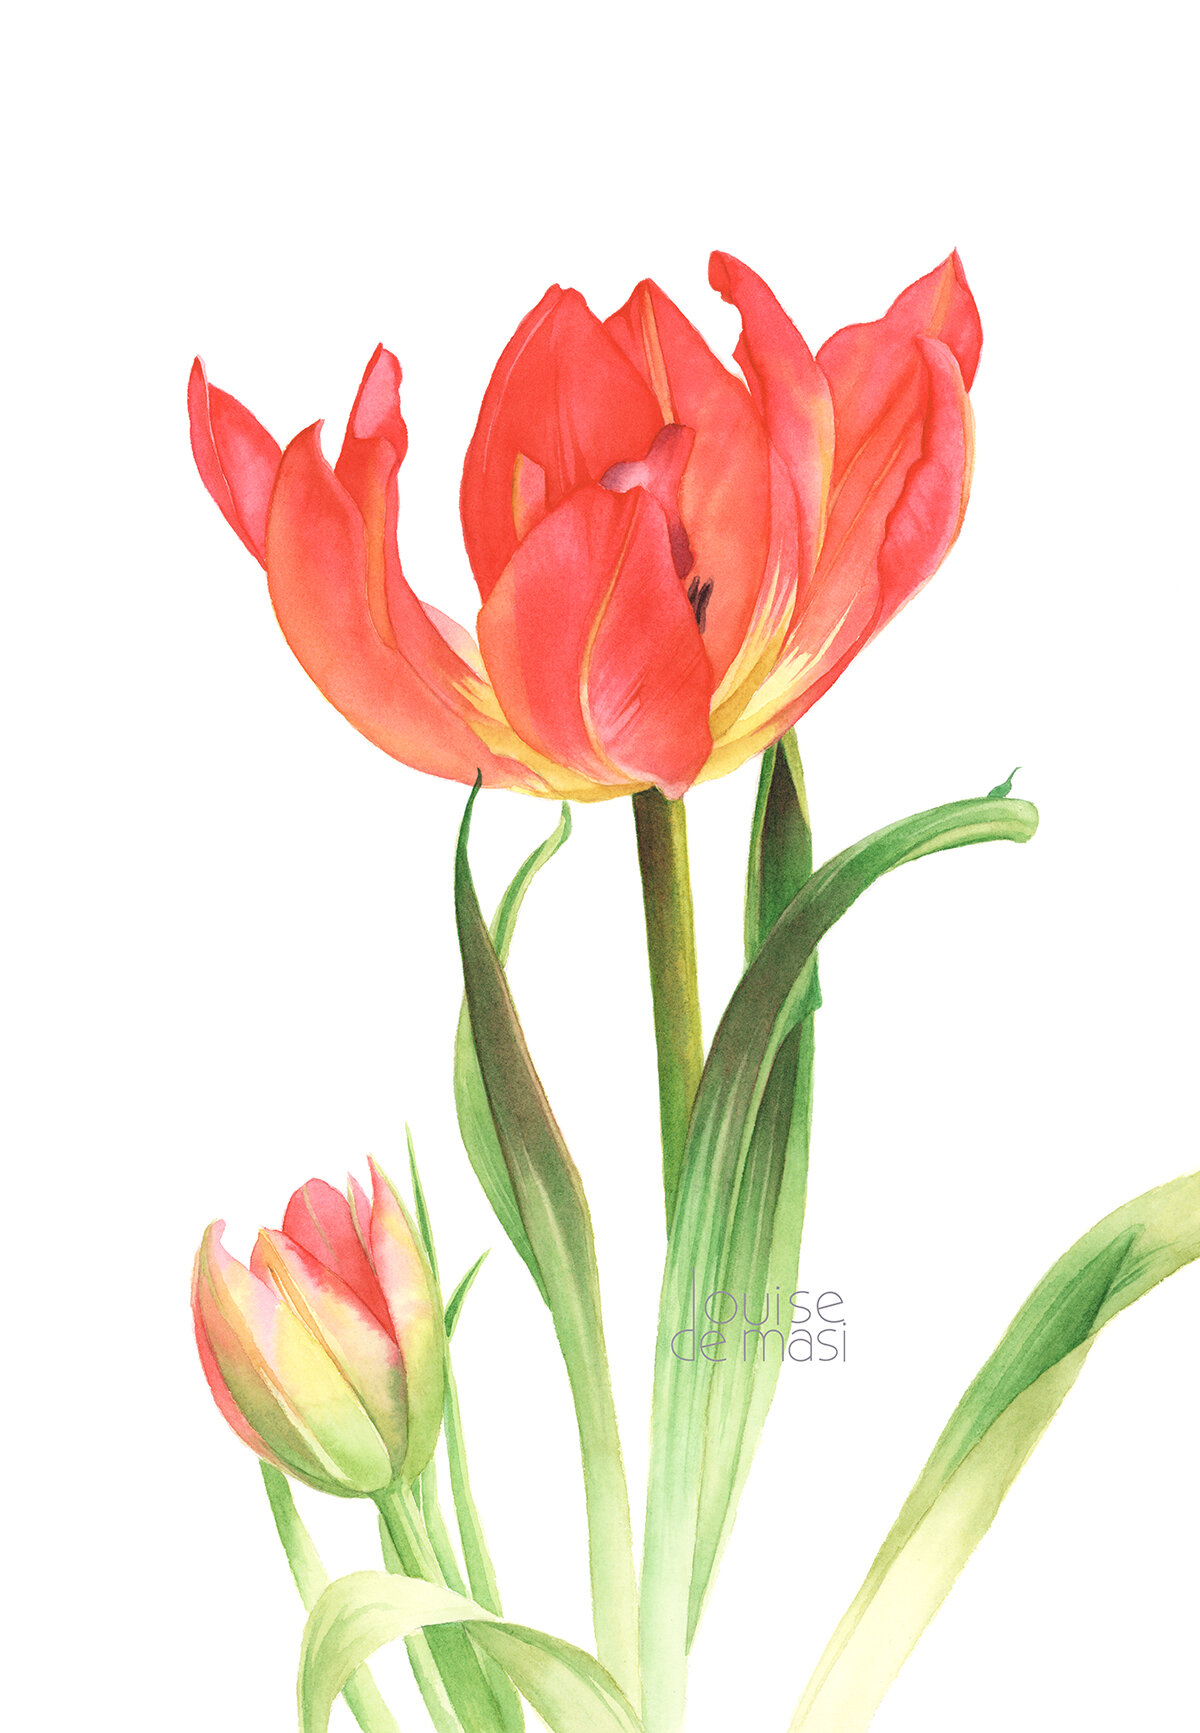 Tulip - intermediate - advanced